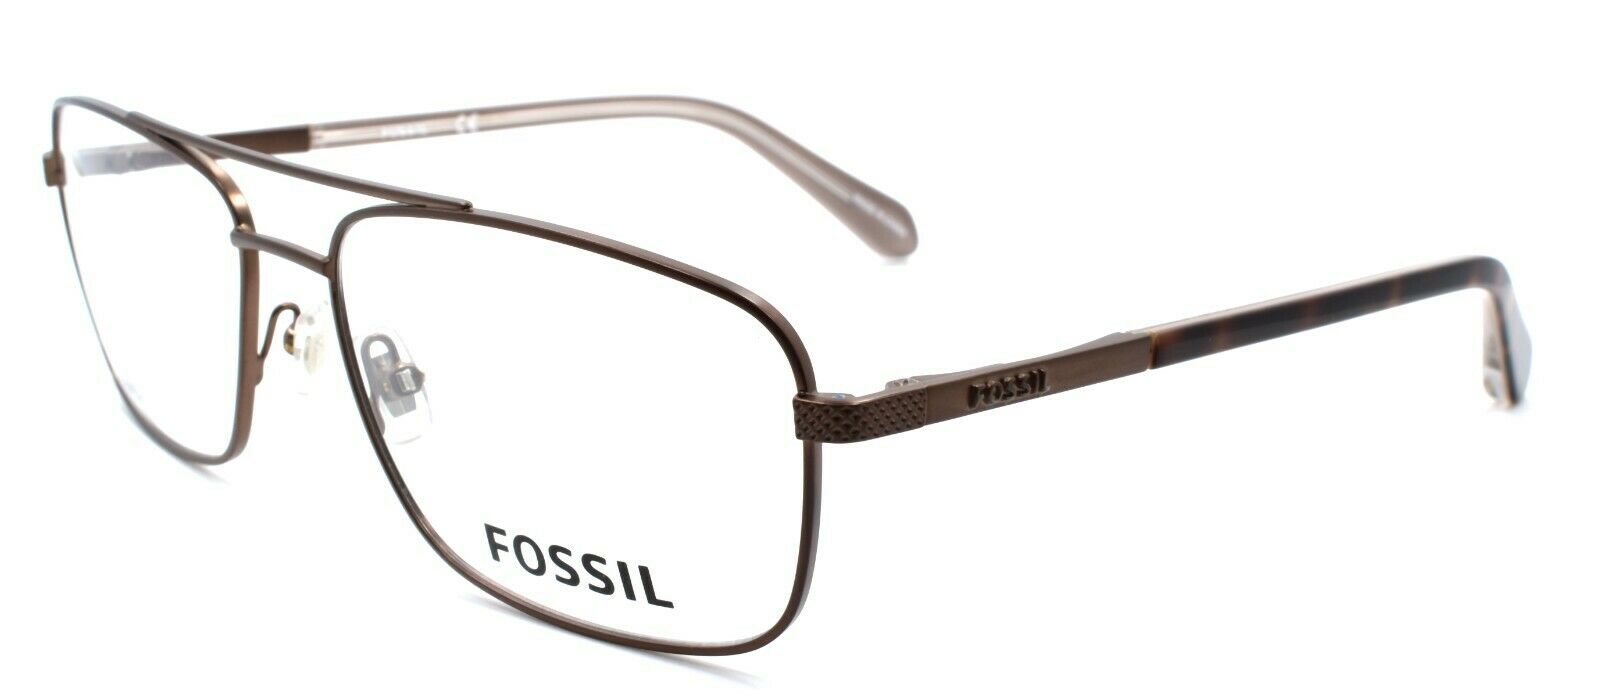 1-Fossil FOS 6060 OKL Men's Eyeglasses Frames Aviator 56-16-140 Brushed Bronze-762753317131-IKSpecs